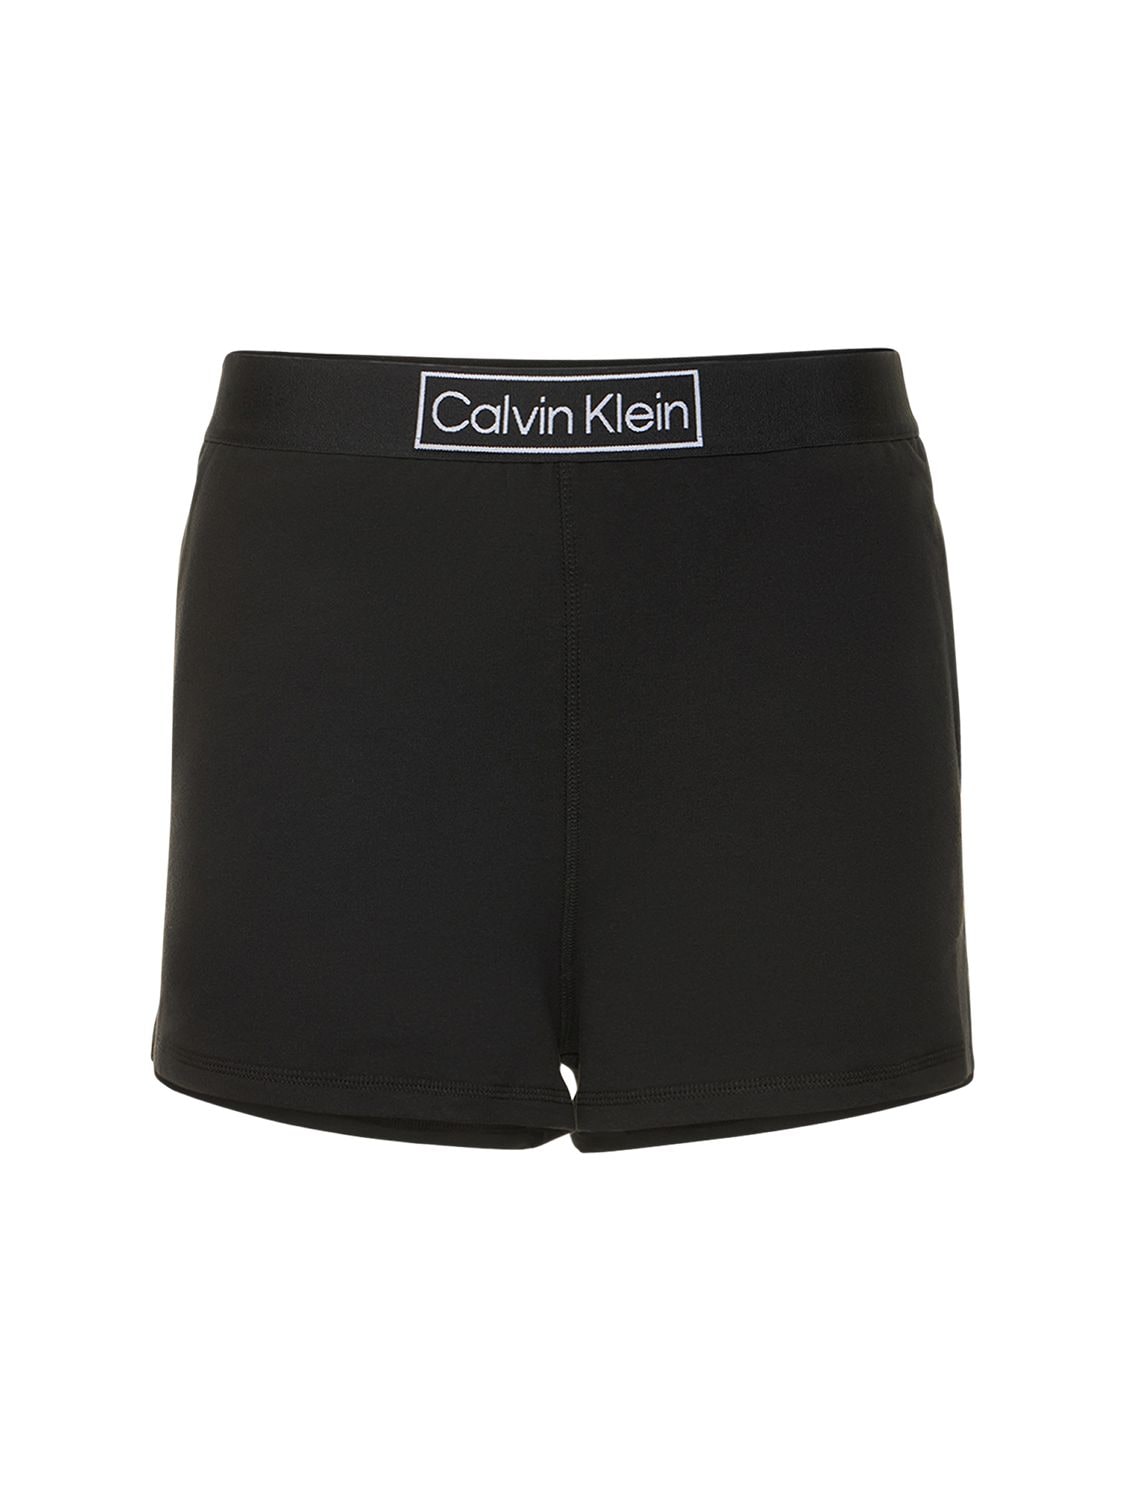 Logo Cotton Blend Shorts - CALVIN KLEIN UNDERWEAR - Modalova